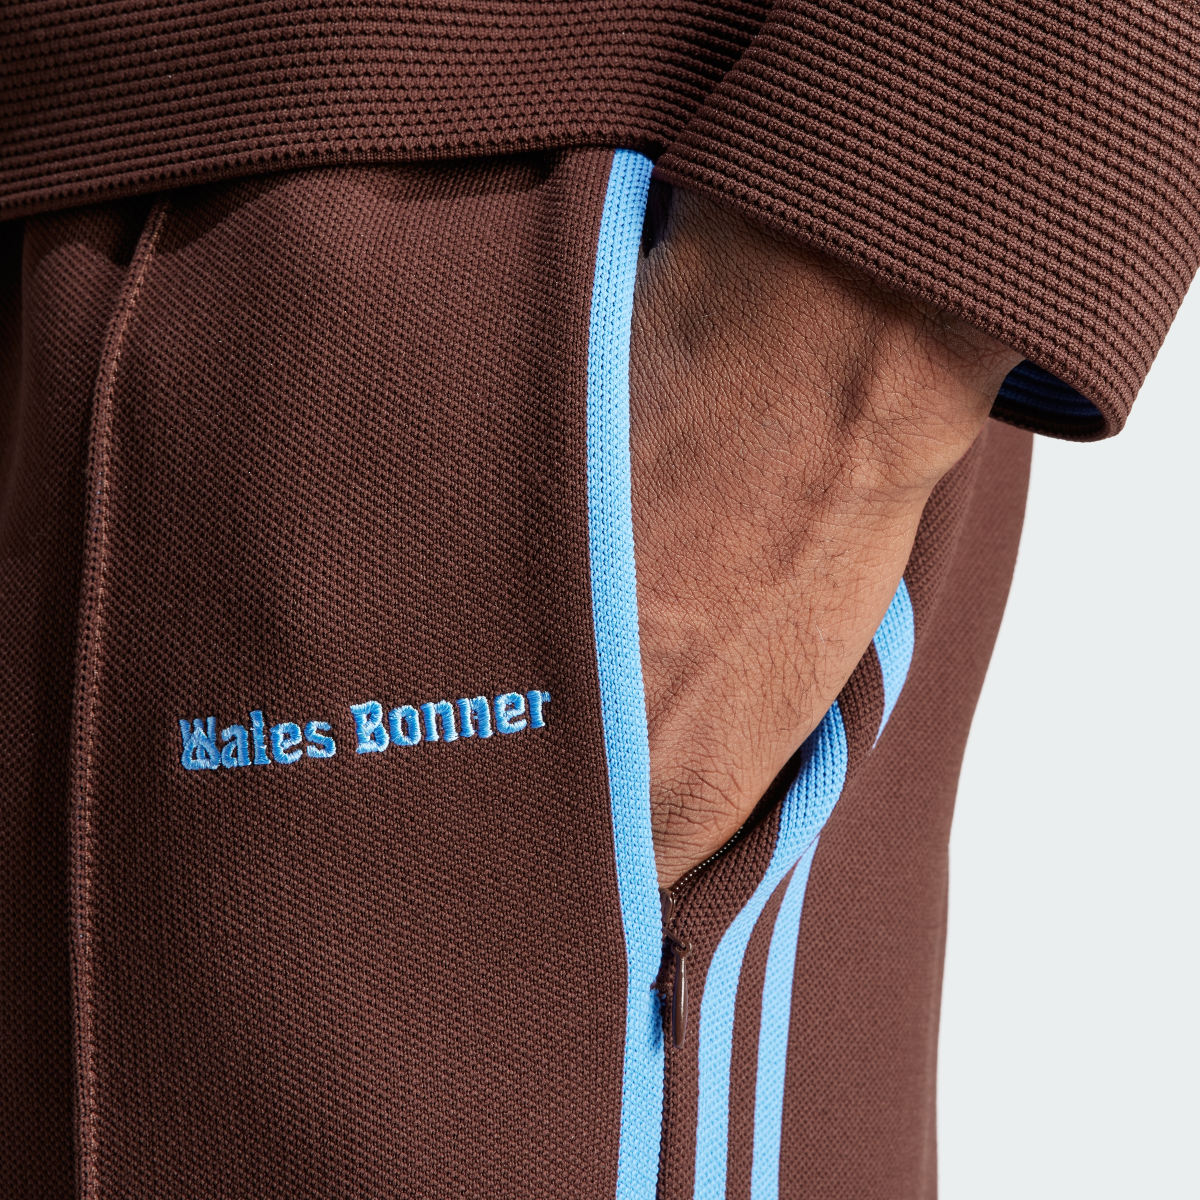 Adidas Spodnie Wales Bonner Track Suit. 7